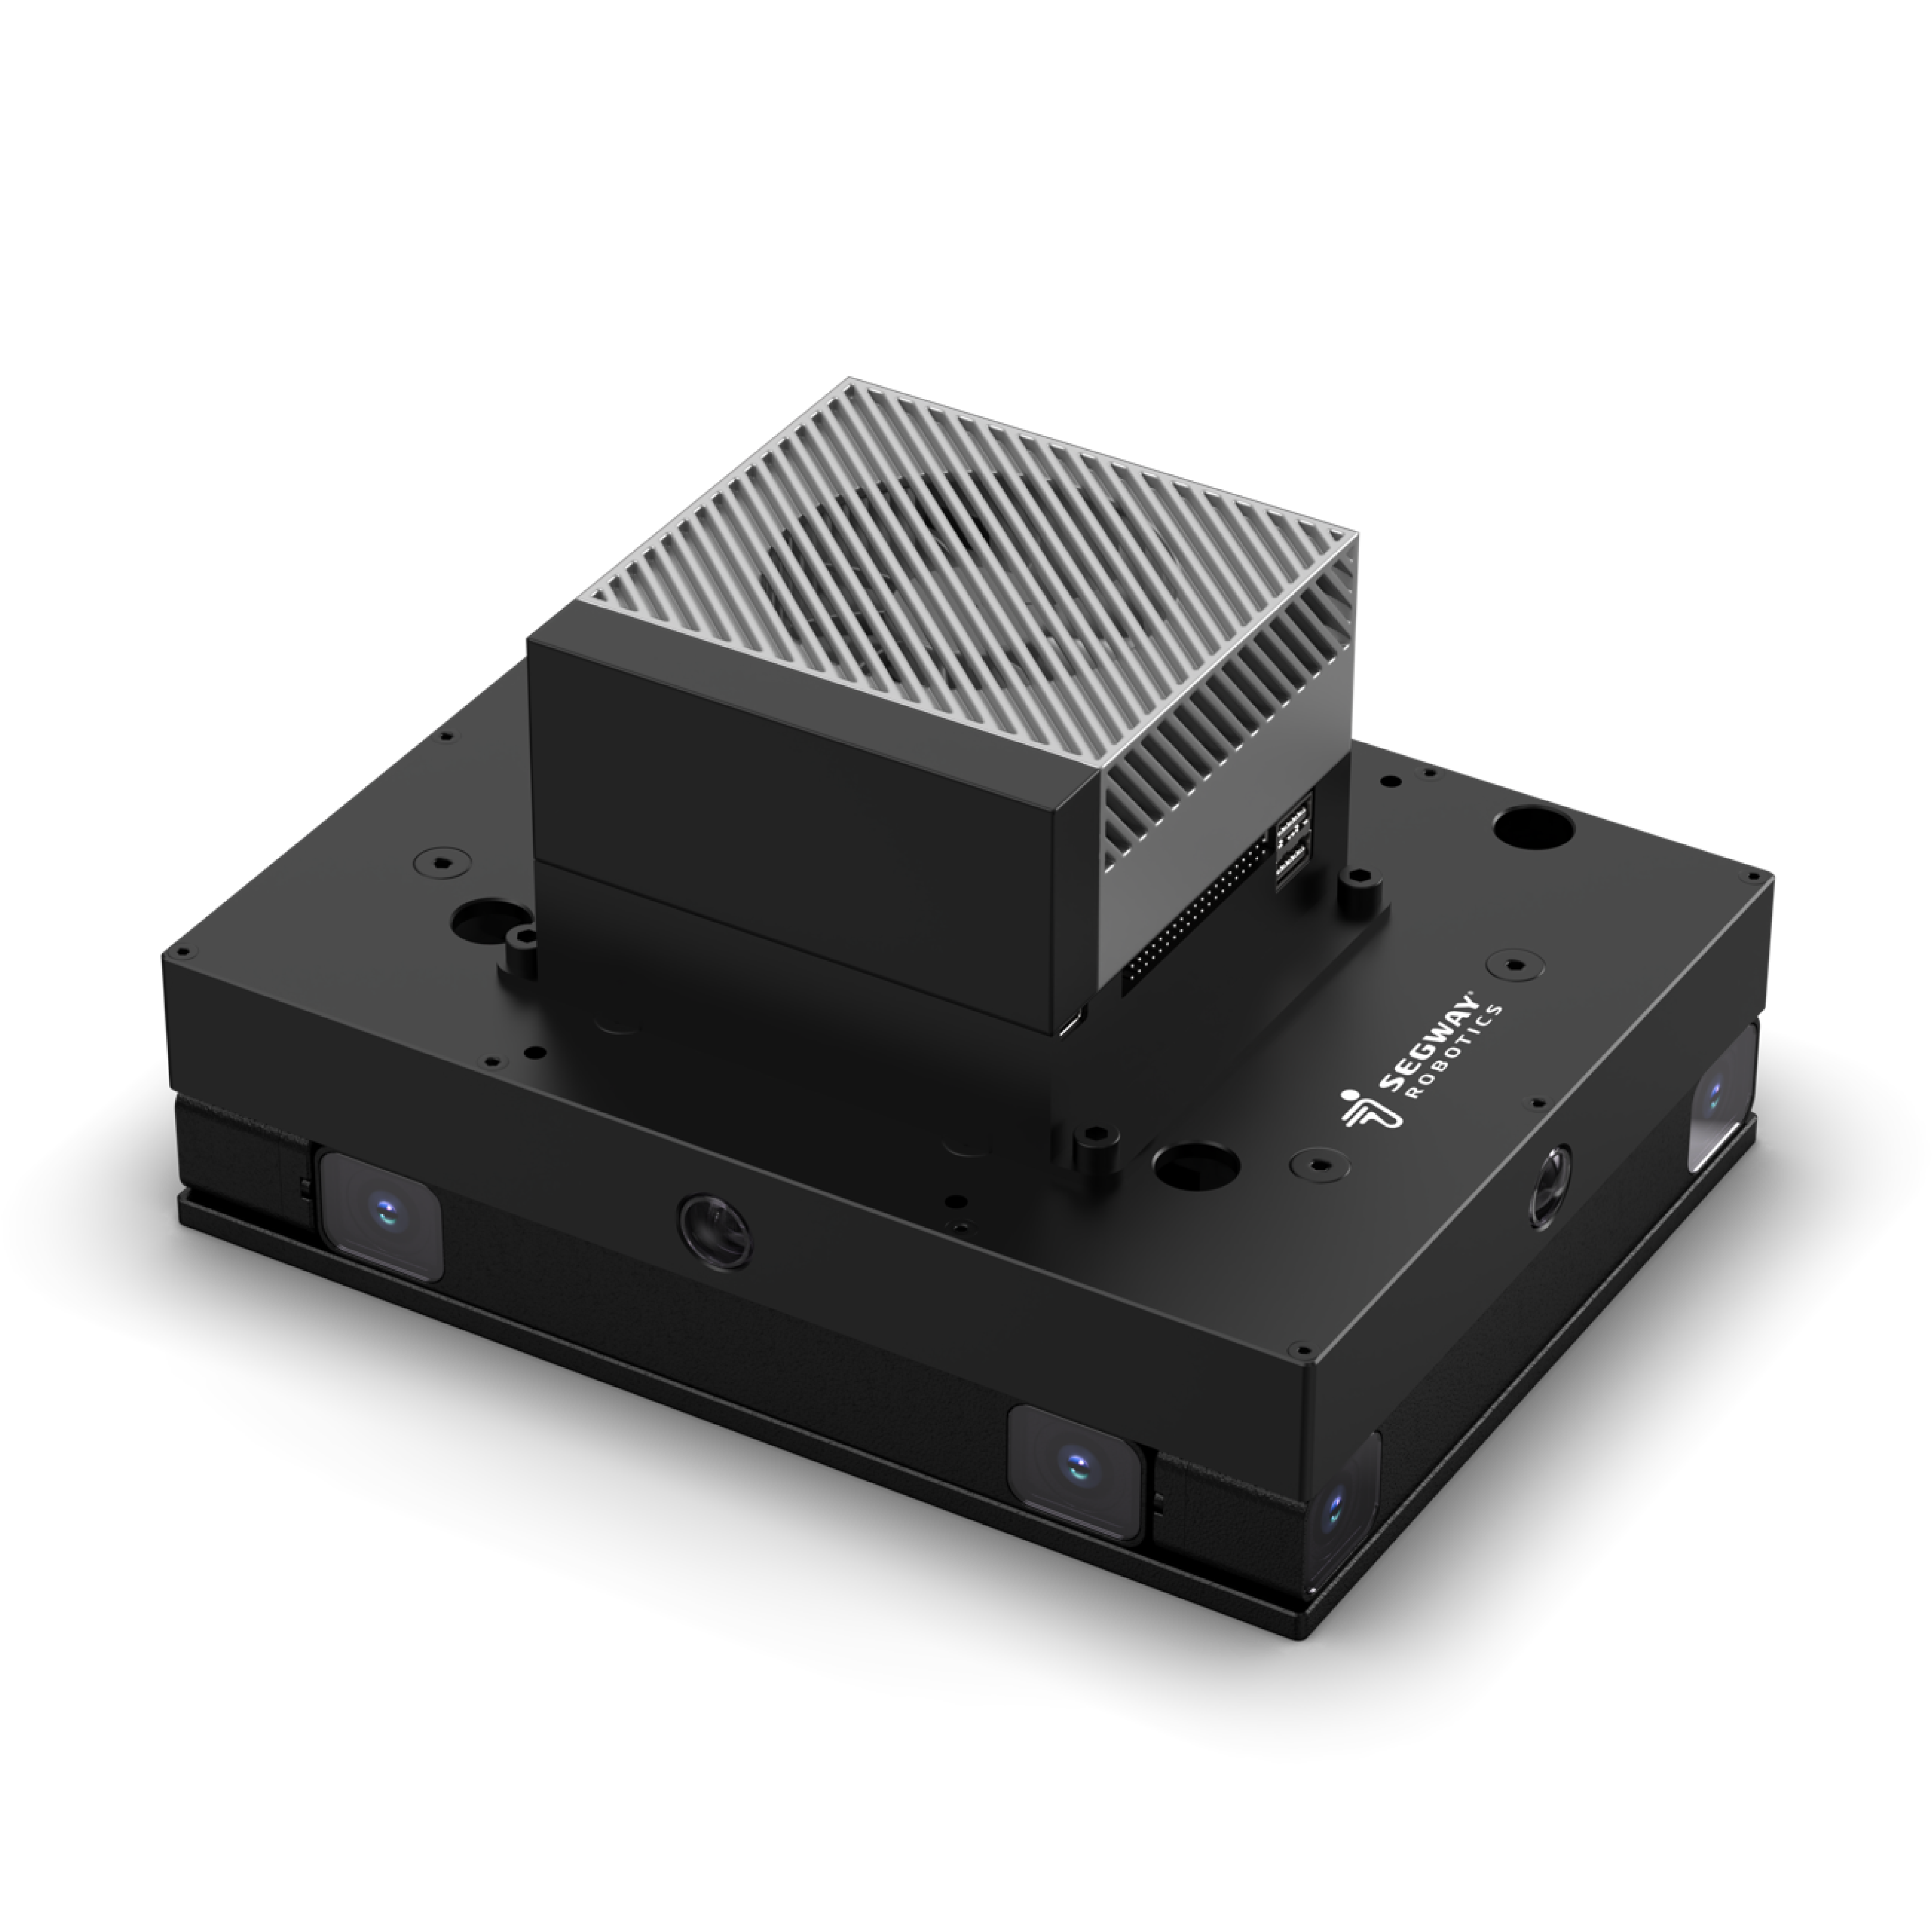 Segway Collaborates with NVIDIA to Introduce NVIDIA Isaac-powered Nova Orin Developer Kit for Autonomous Mobile Robots